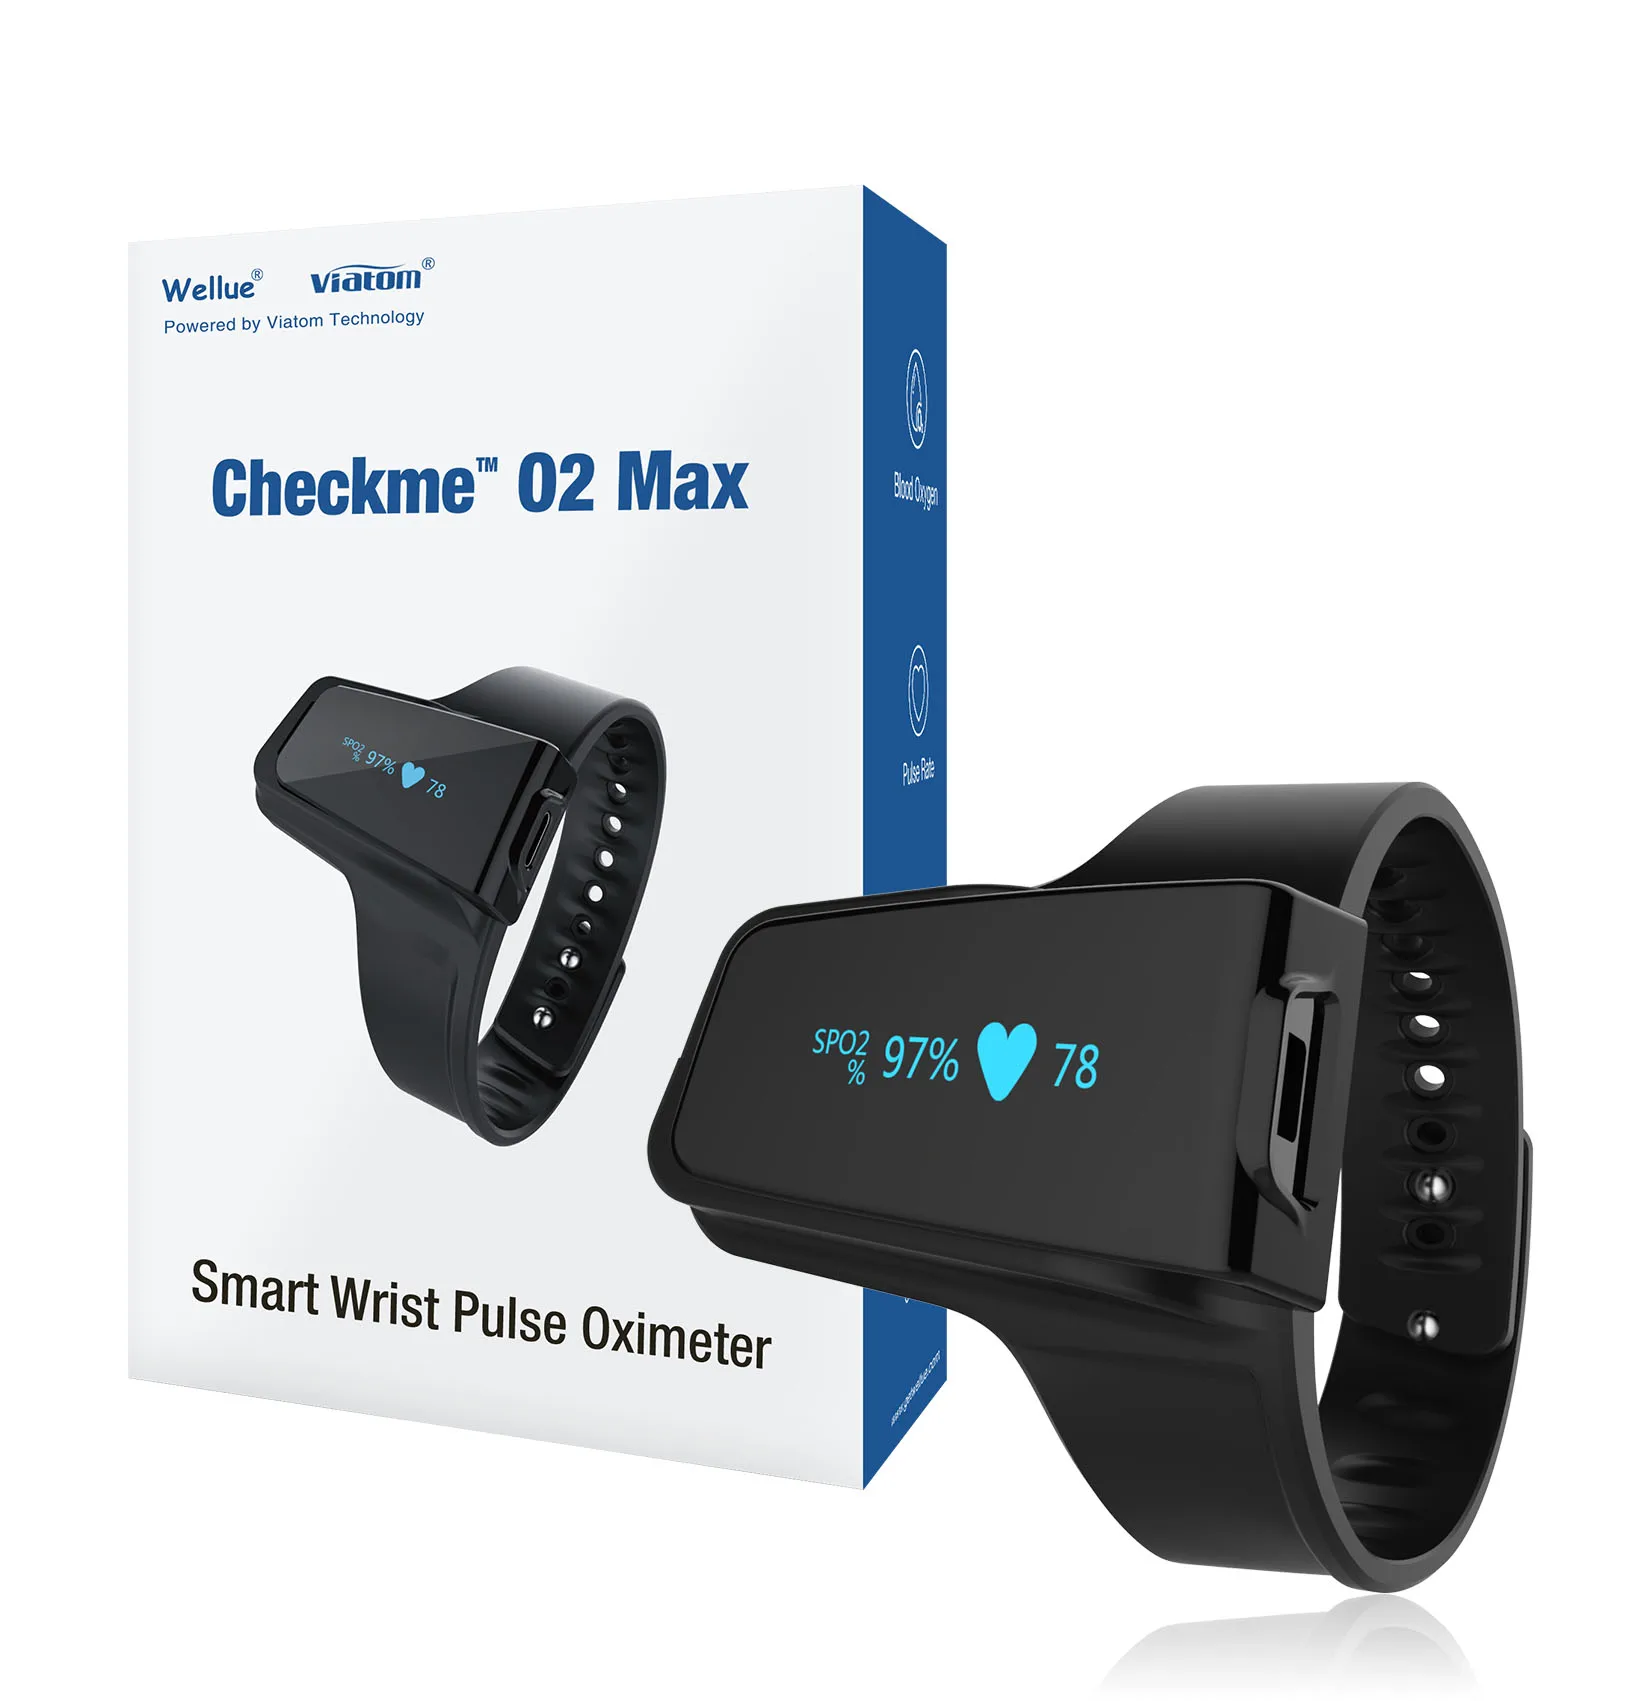 

Viatom Checkme O2 Max Sleep Oximeter Oxygen Saturation Monitor For Sleep Apnea with Vibration Alarm APP PC Report Android Ios